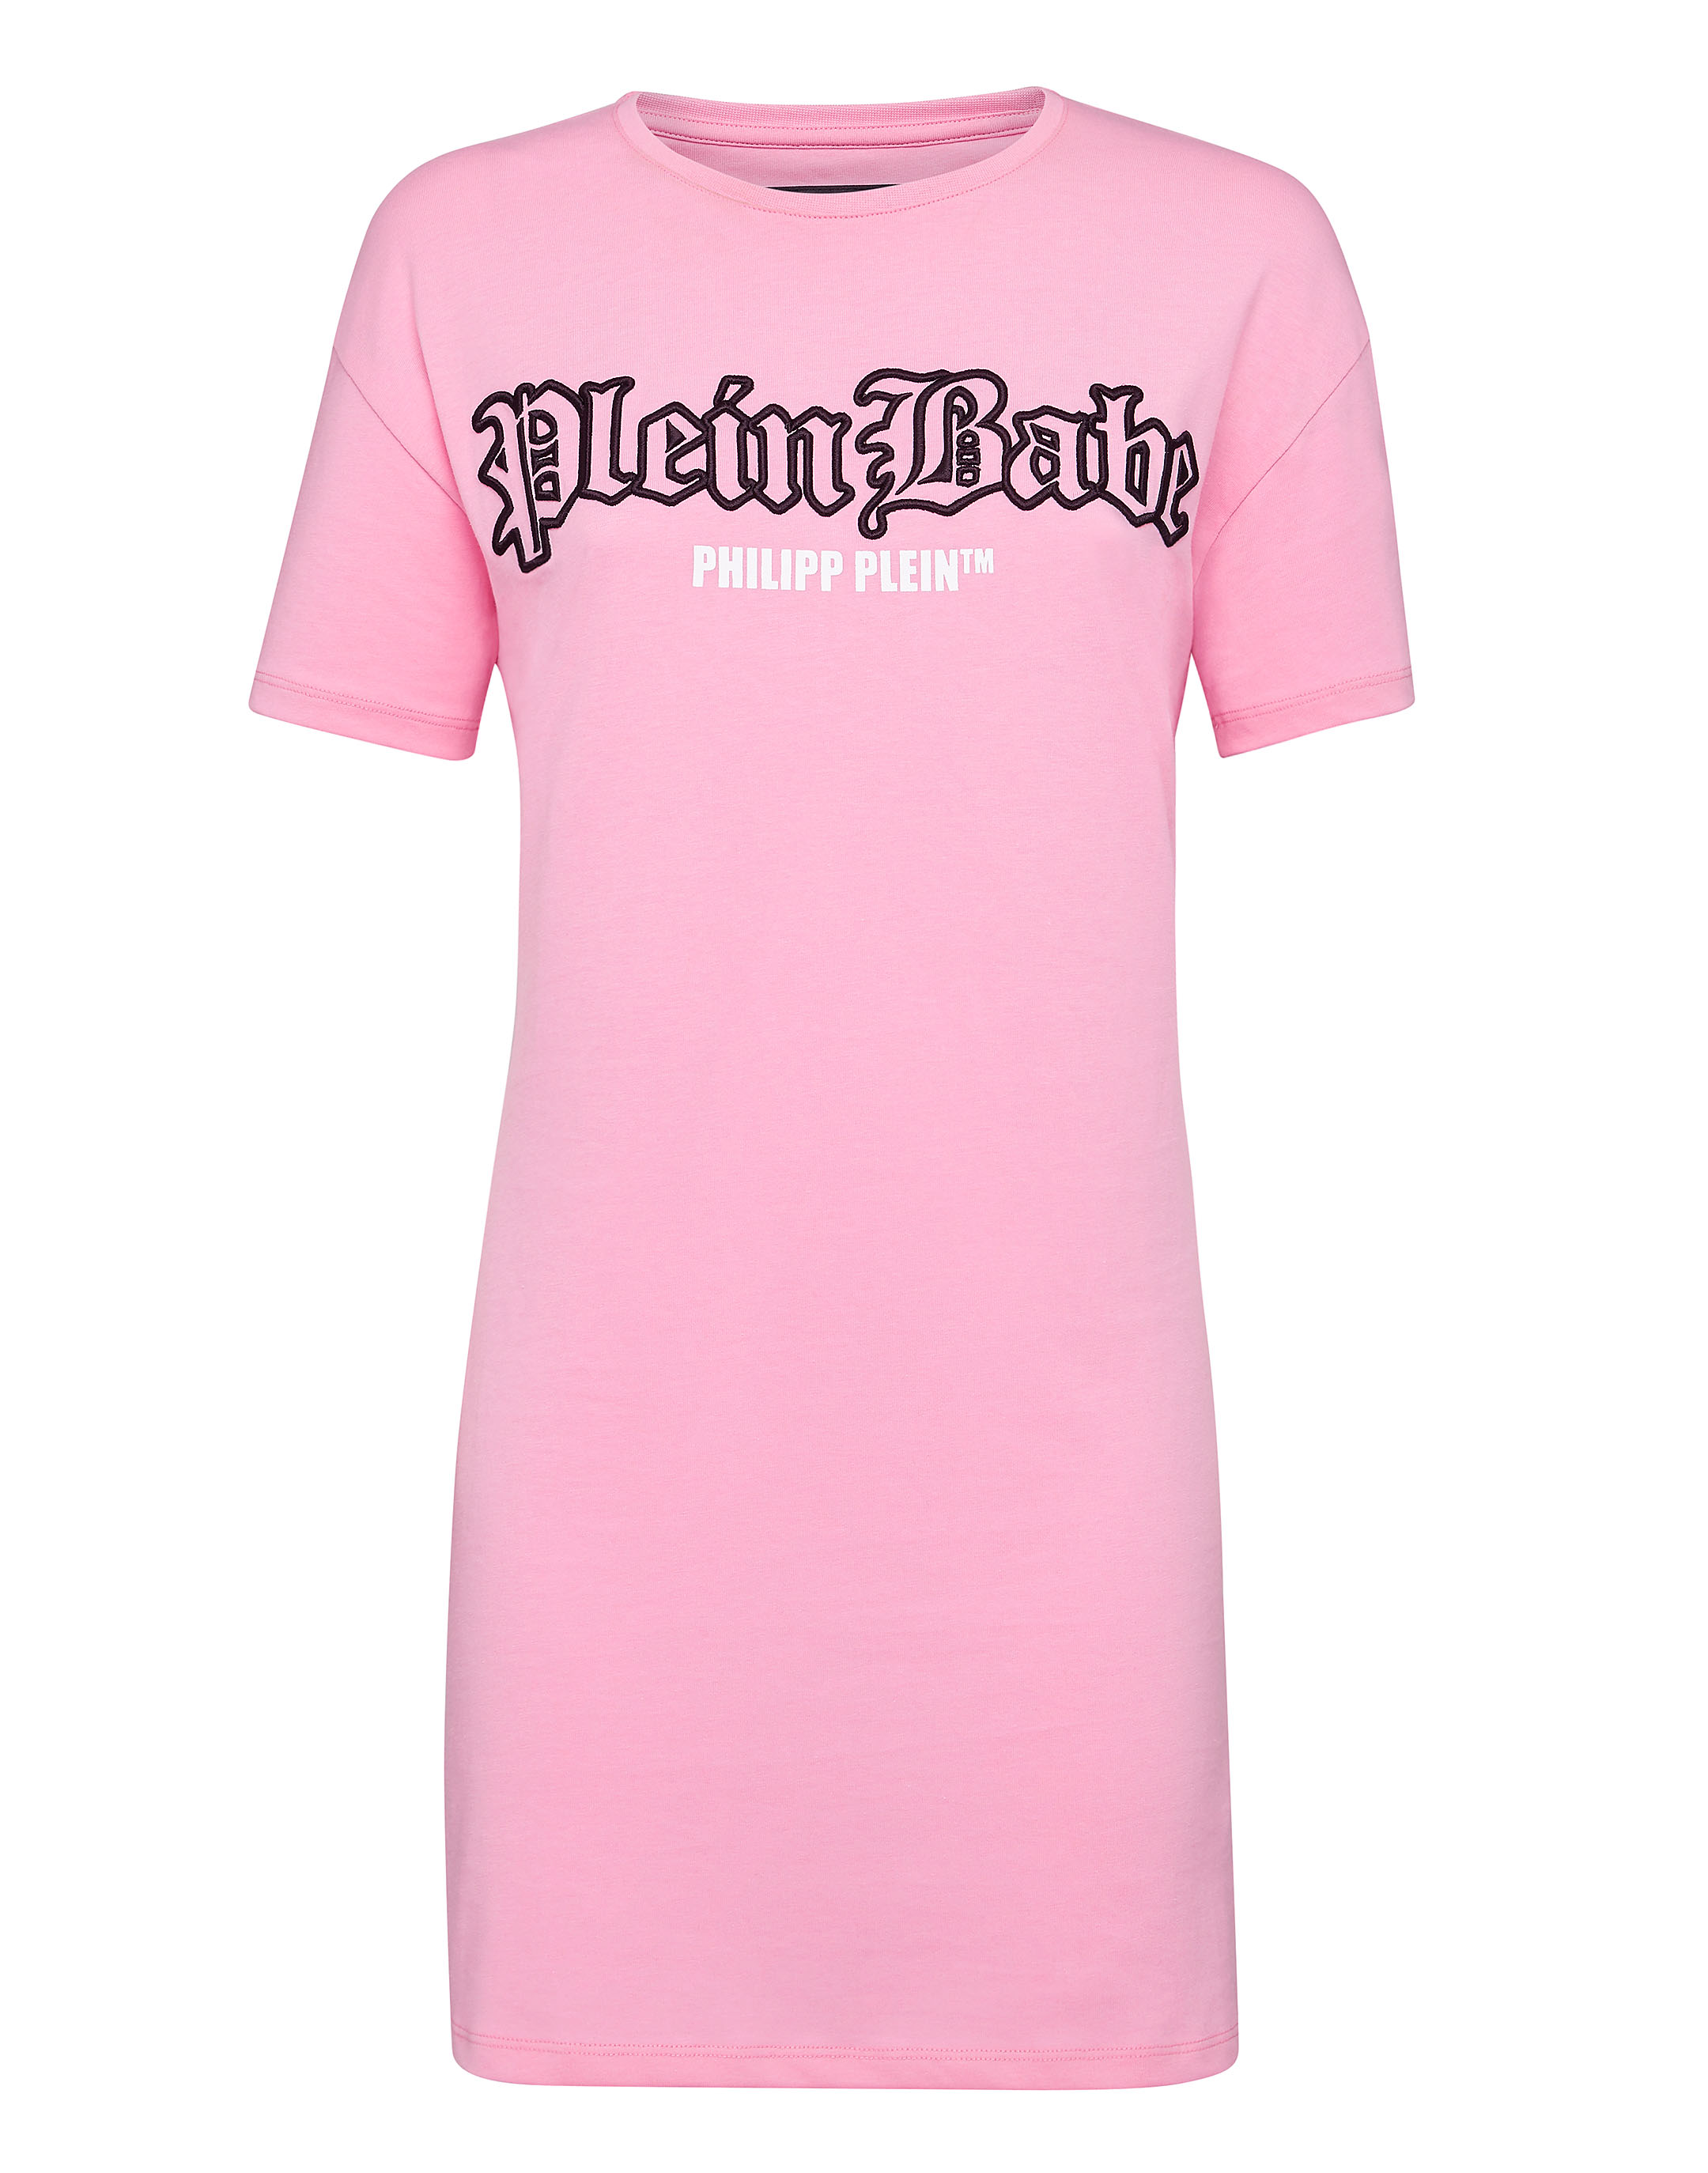 Soeverein synoniemenlijst toezicht houden op T-Shirt Short Dresses Pink paradise | Philipp Plein